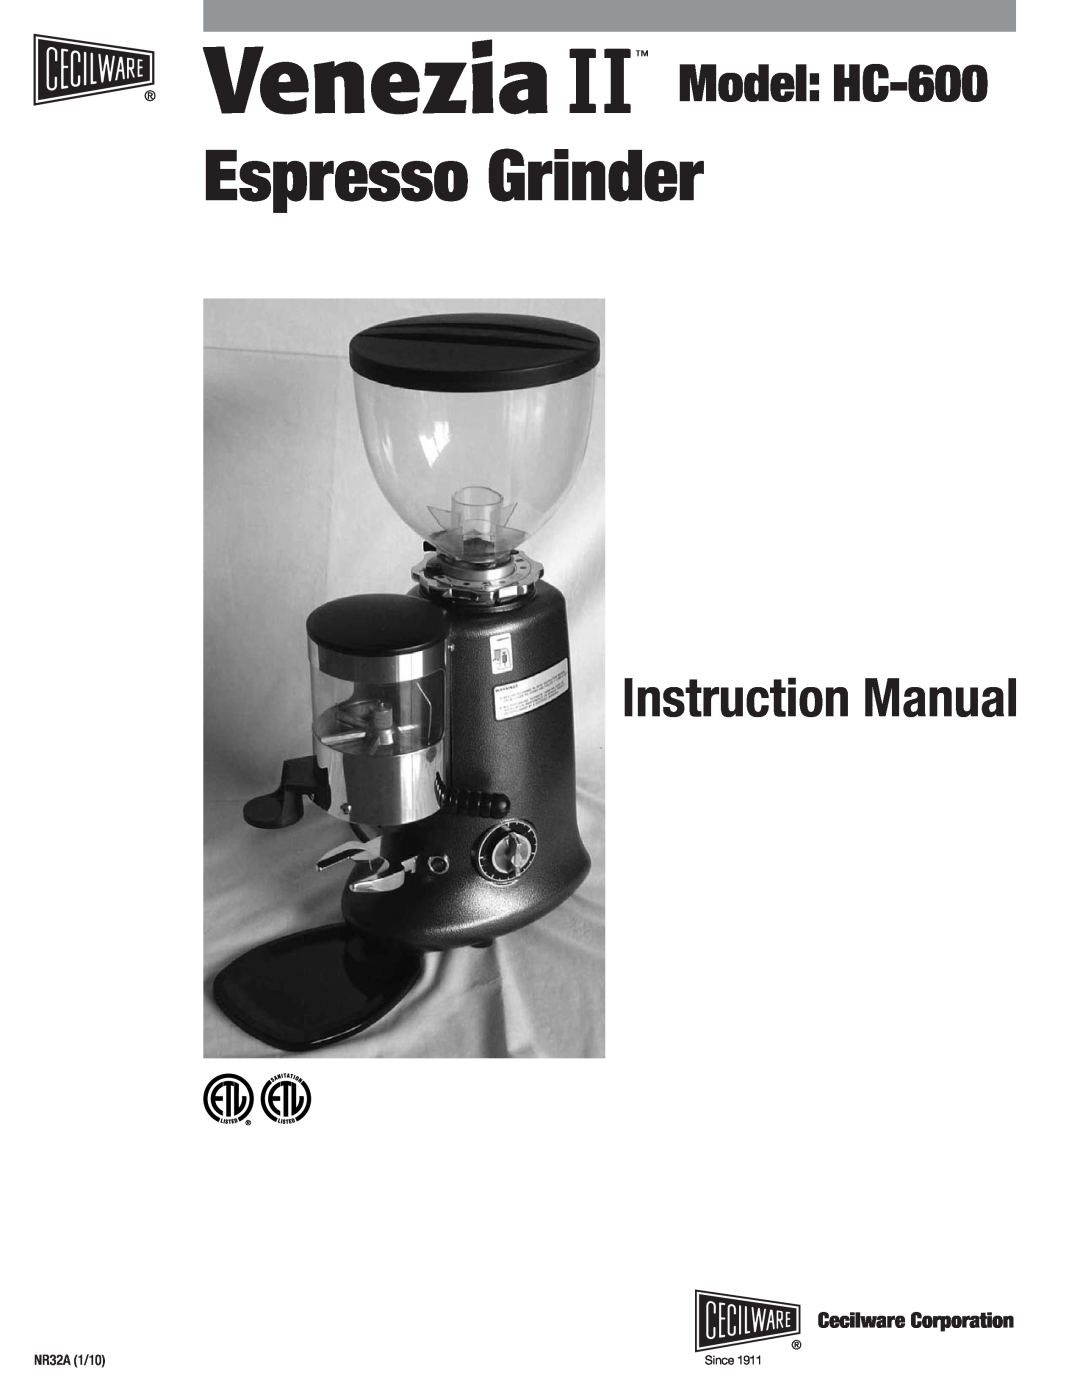 Cecilware instruction manual Espresso Grinder, Venezia II Model HC-600, NR32A 1/10, Since 